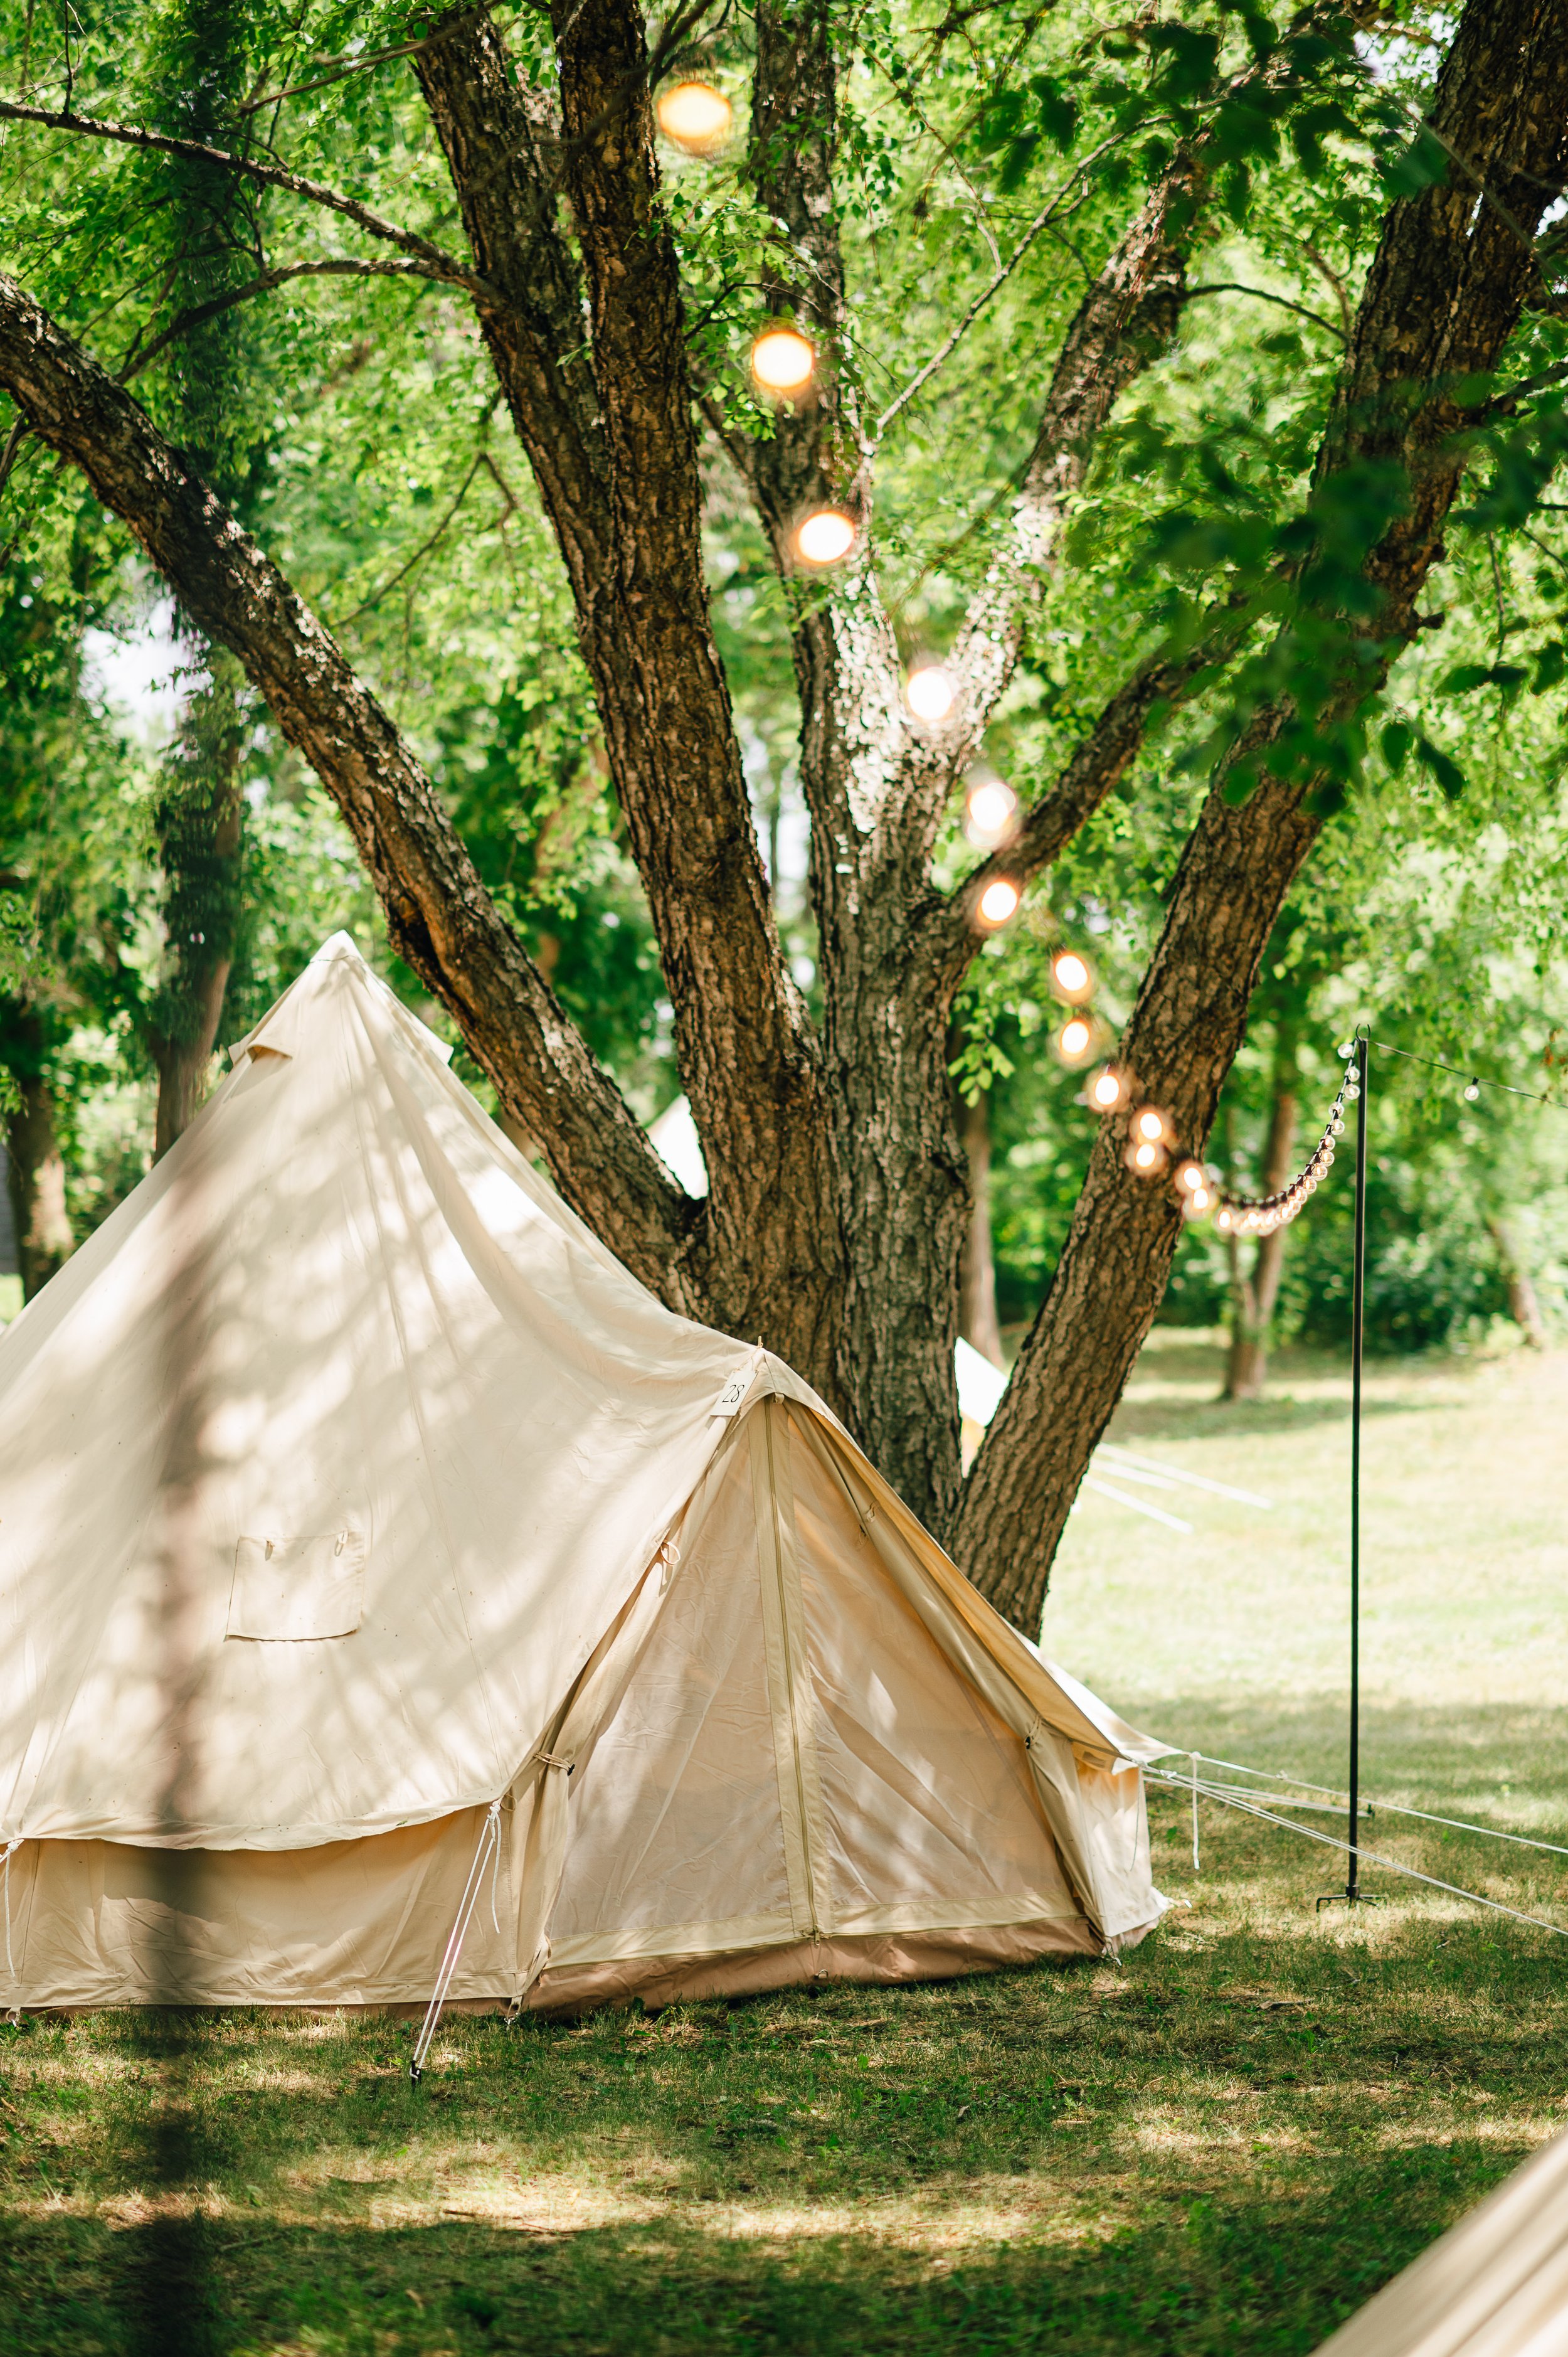 Pitched-glamping-tent-rental-corporate-retreats-arizona-minnesota-california-utah00098.jpg